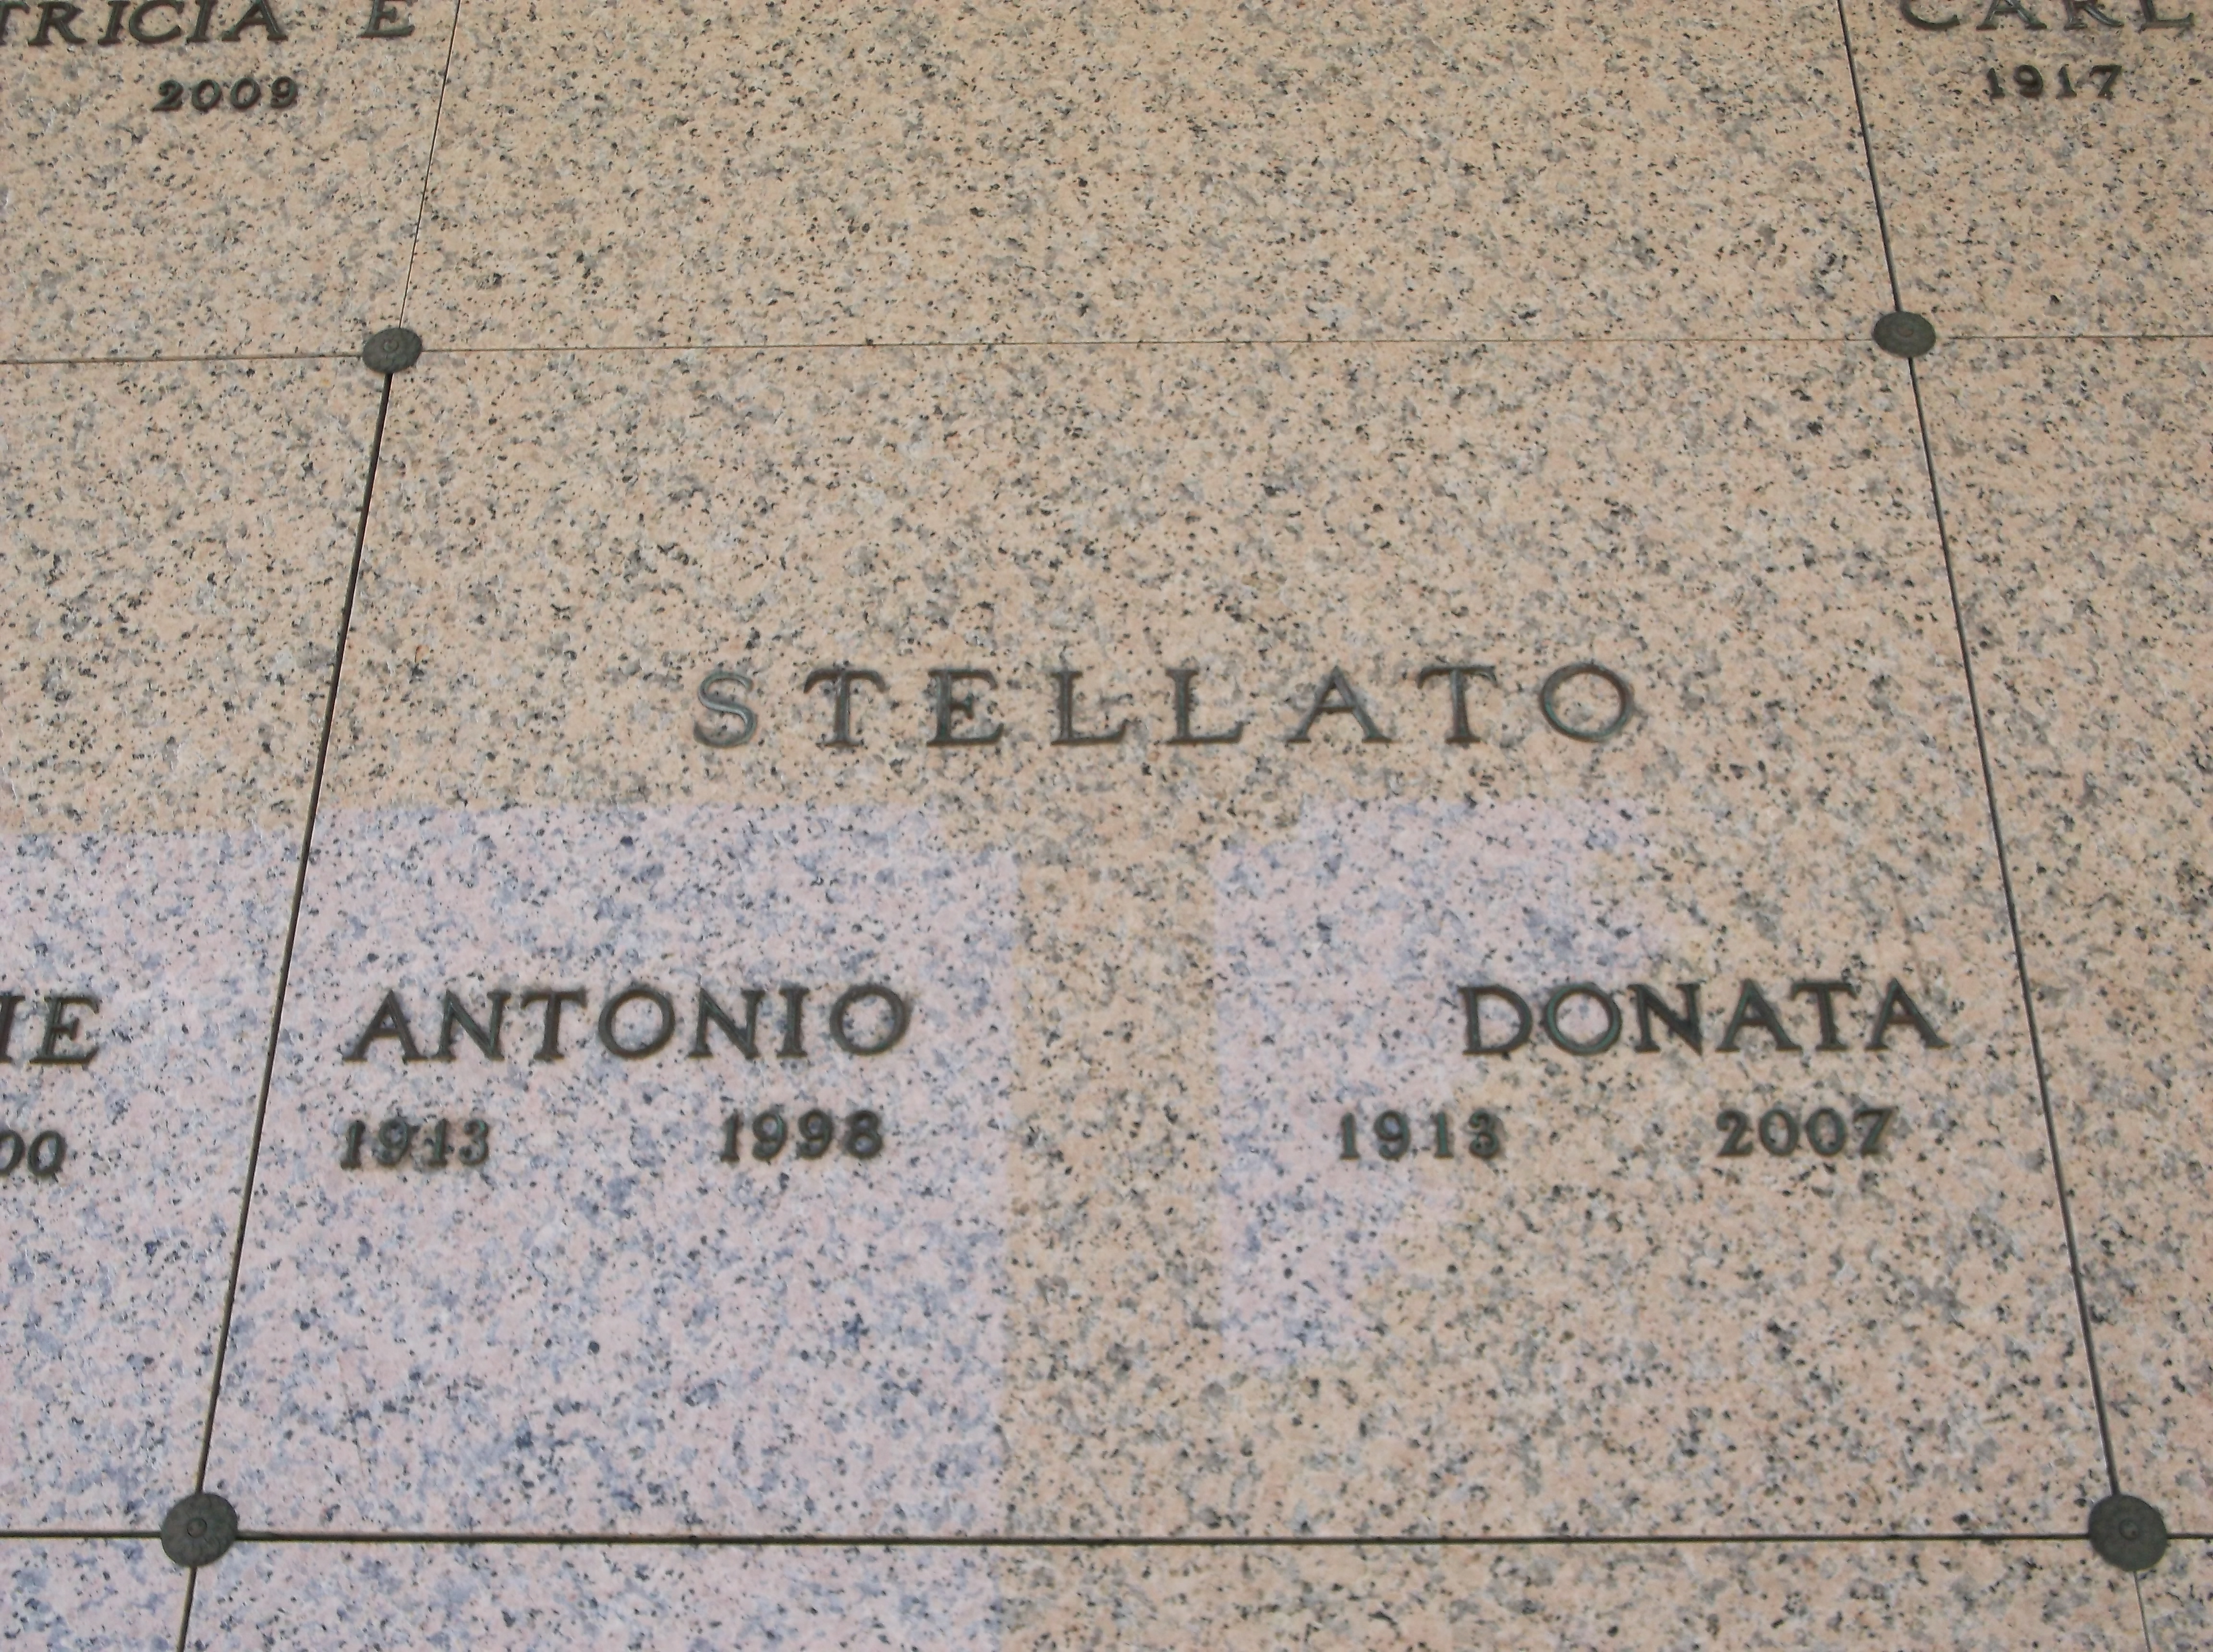 Antonio Stellato